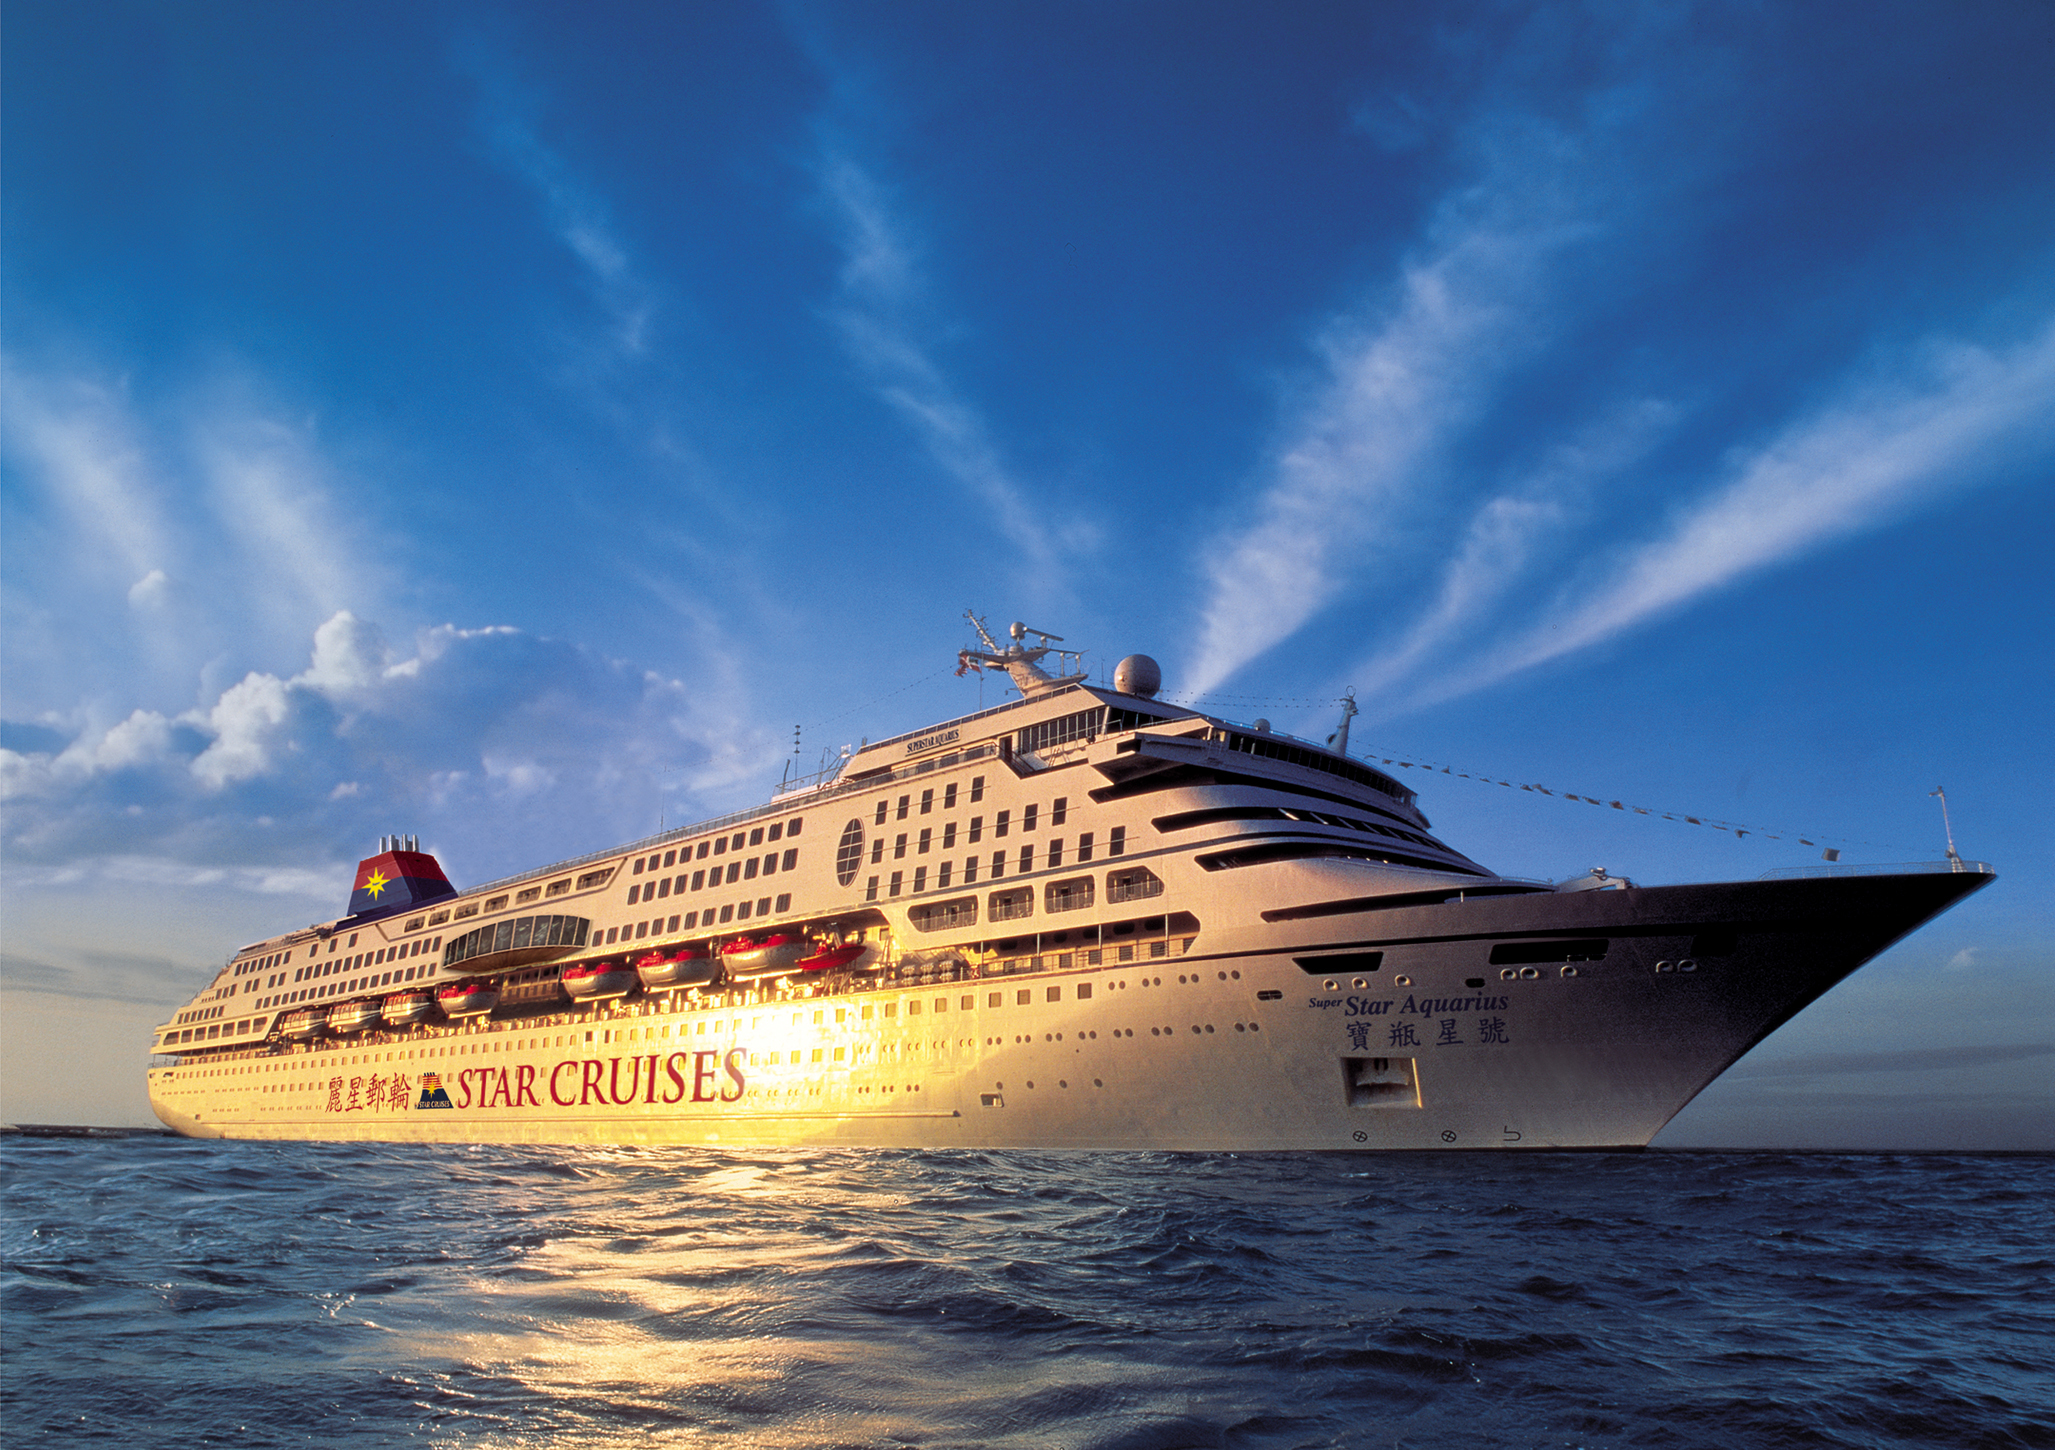 cruise wallpaper,cruise ship,water transportation,passenger ship,ship,vehicle